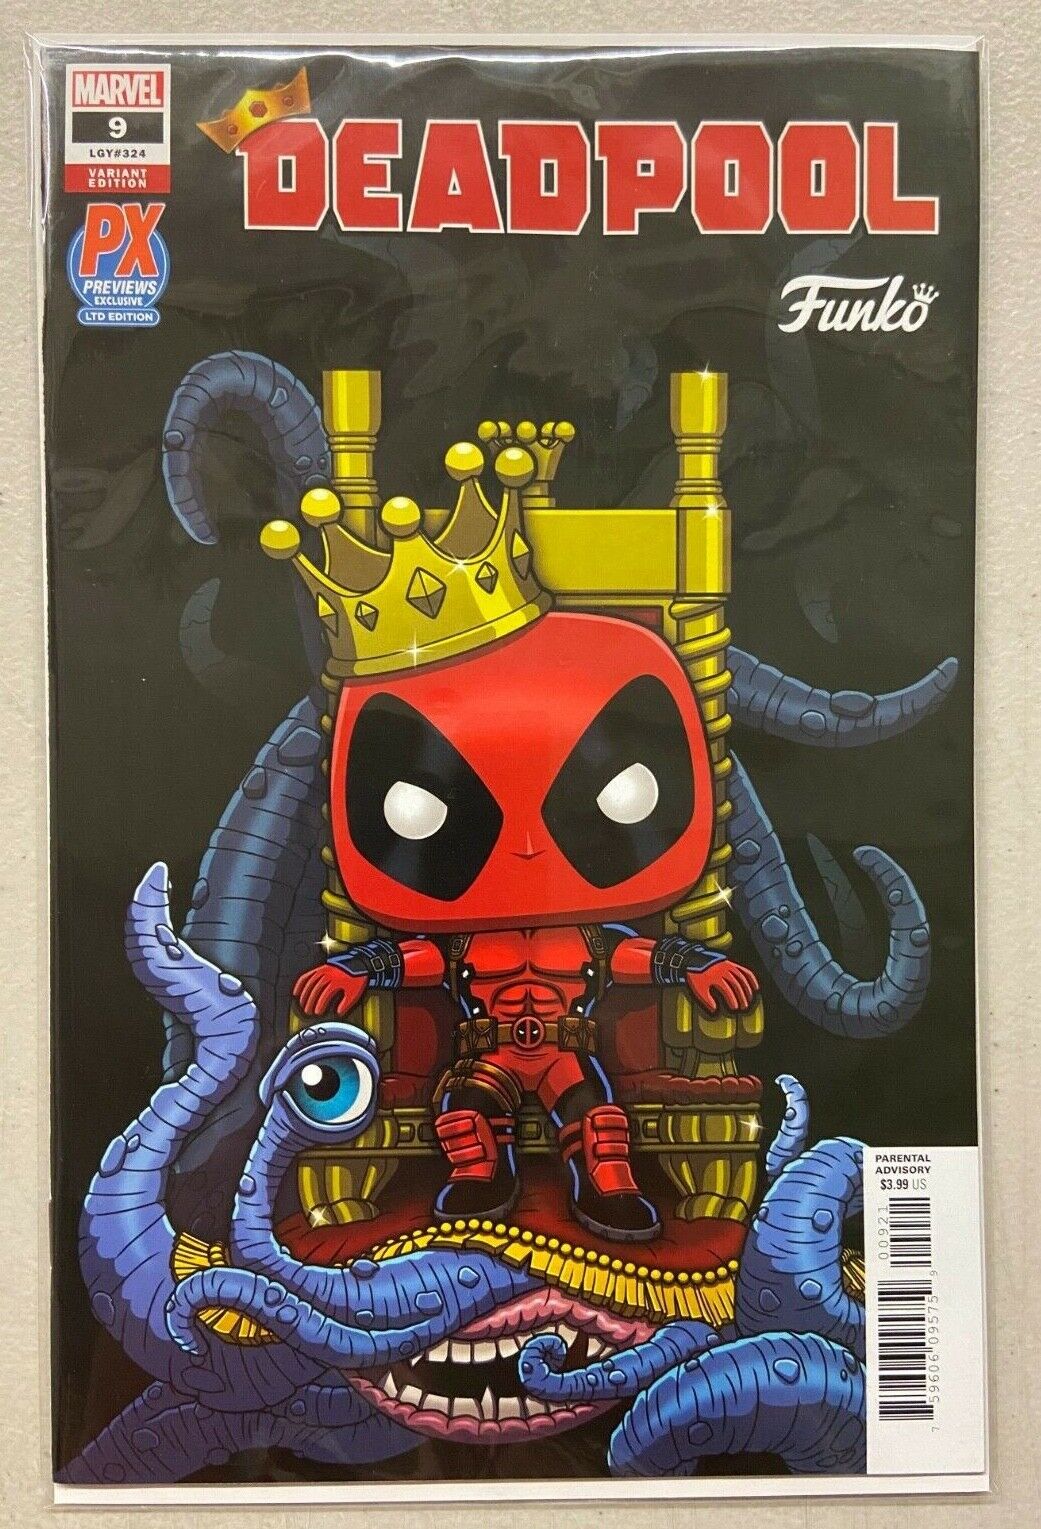 Marvel Deadpool #9 Funko Pop King Deadpool Variant Cover PX Exclusive